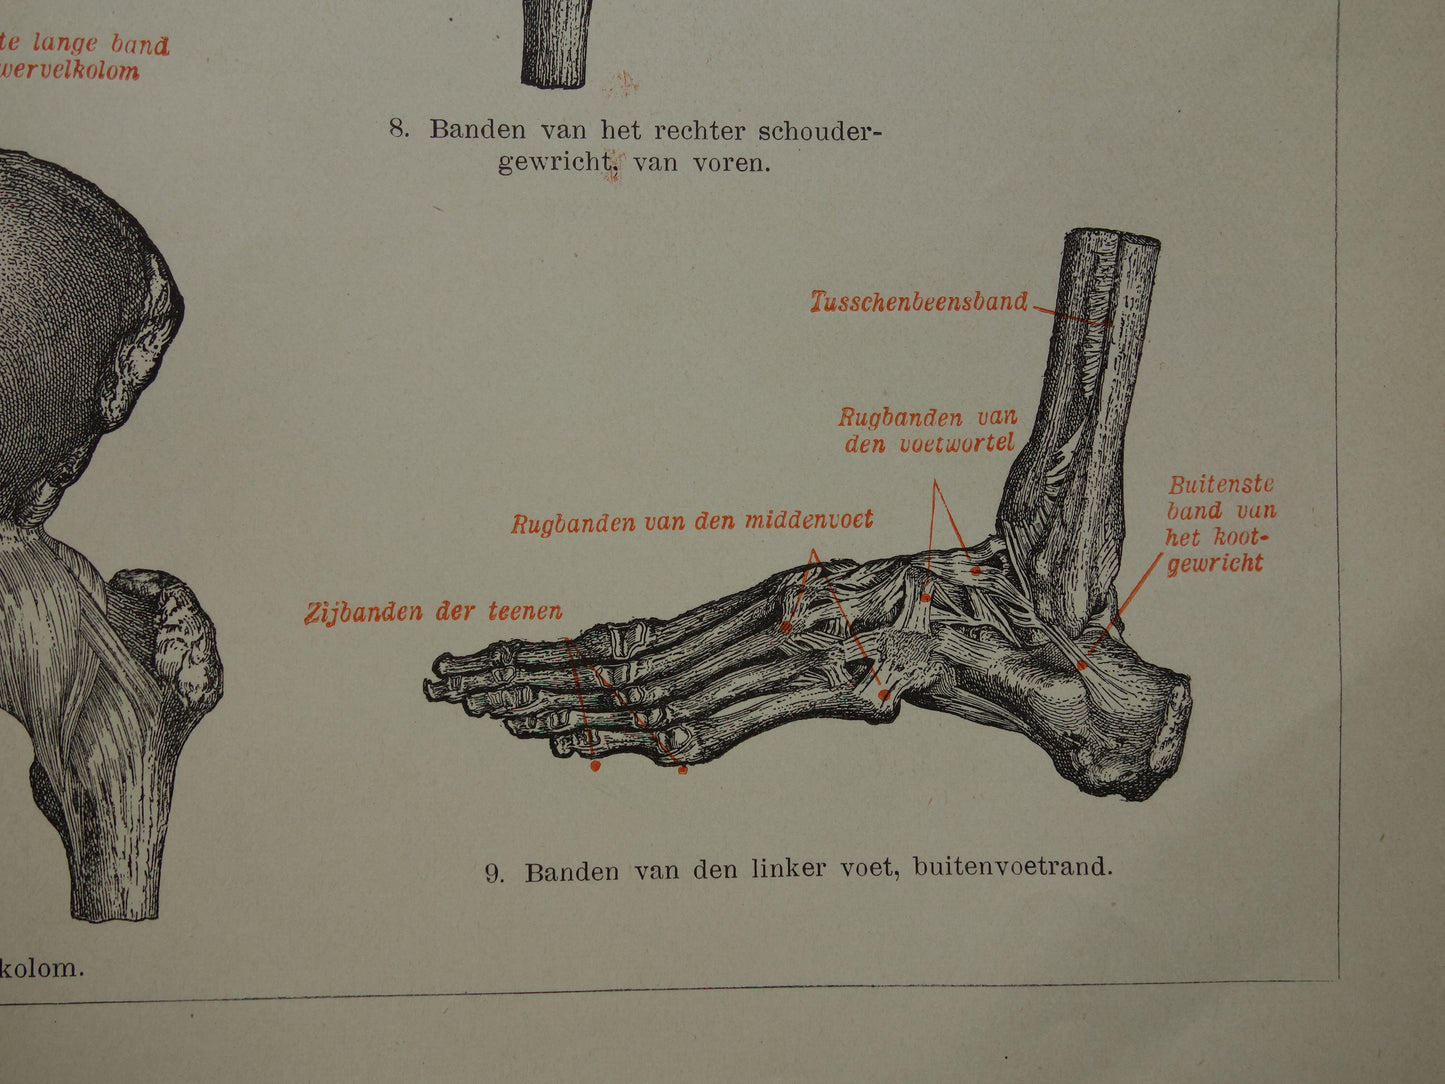 Oude Anatomie Prent Ligamanten Originele antieke anatomische illustratie vintage print van banden ligament gewrichtsbanden